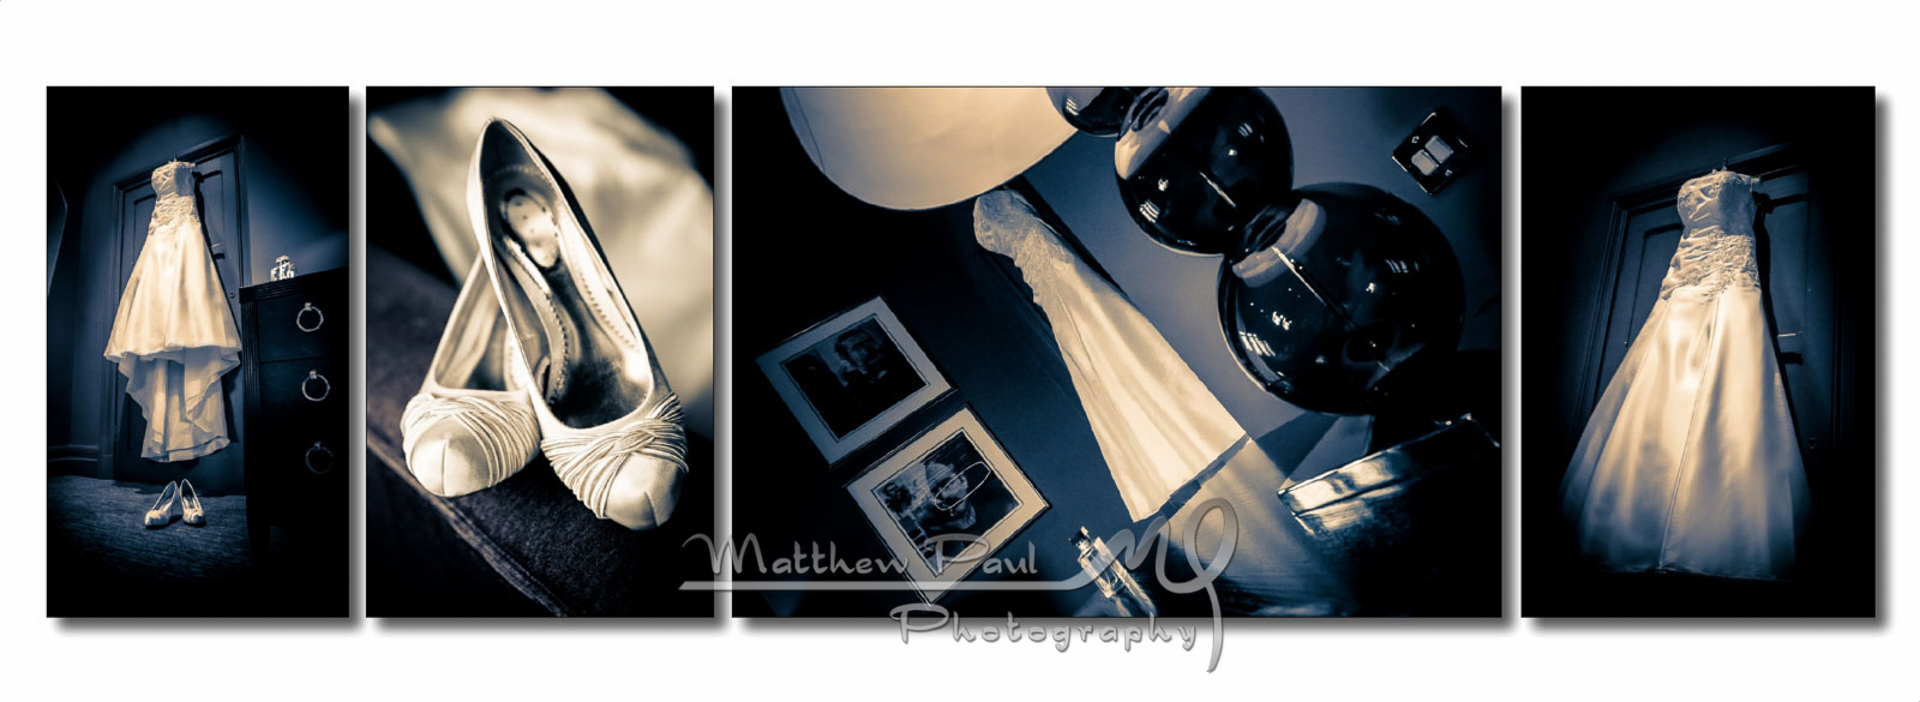 Wedding details with Matthew Paul Photography preset